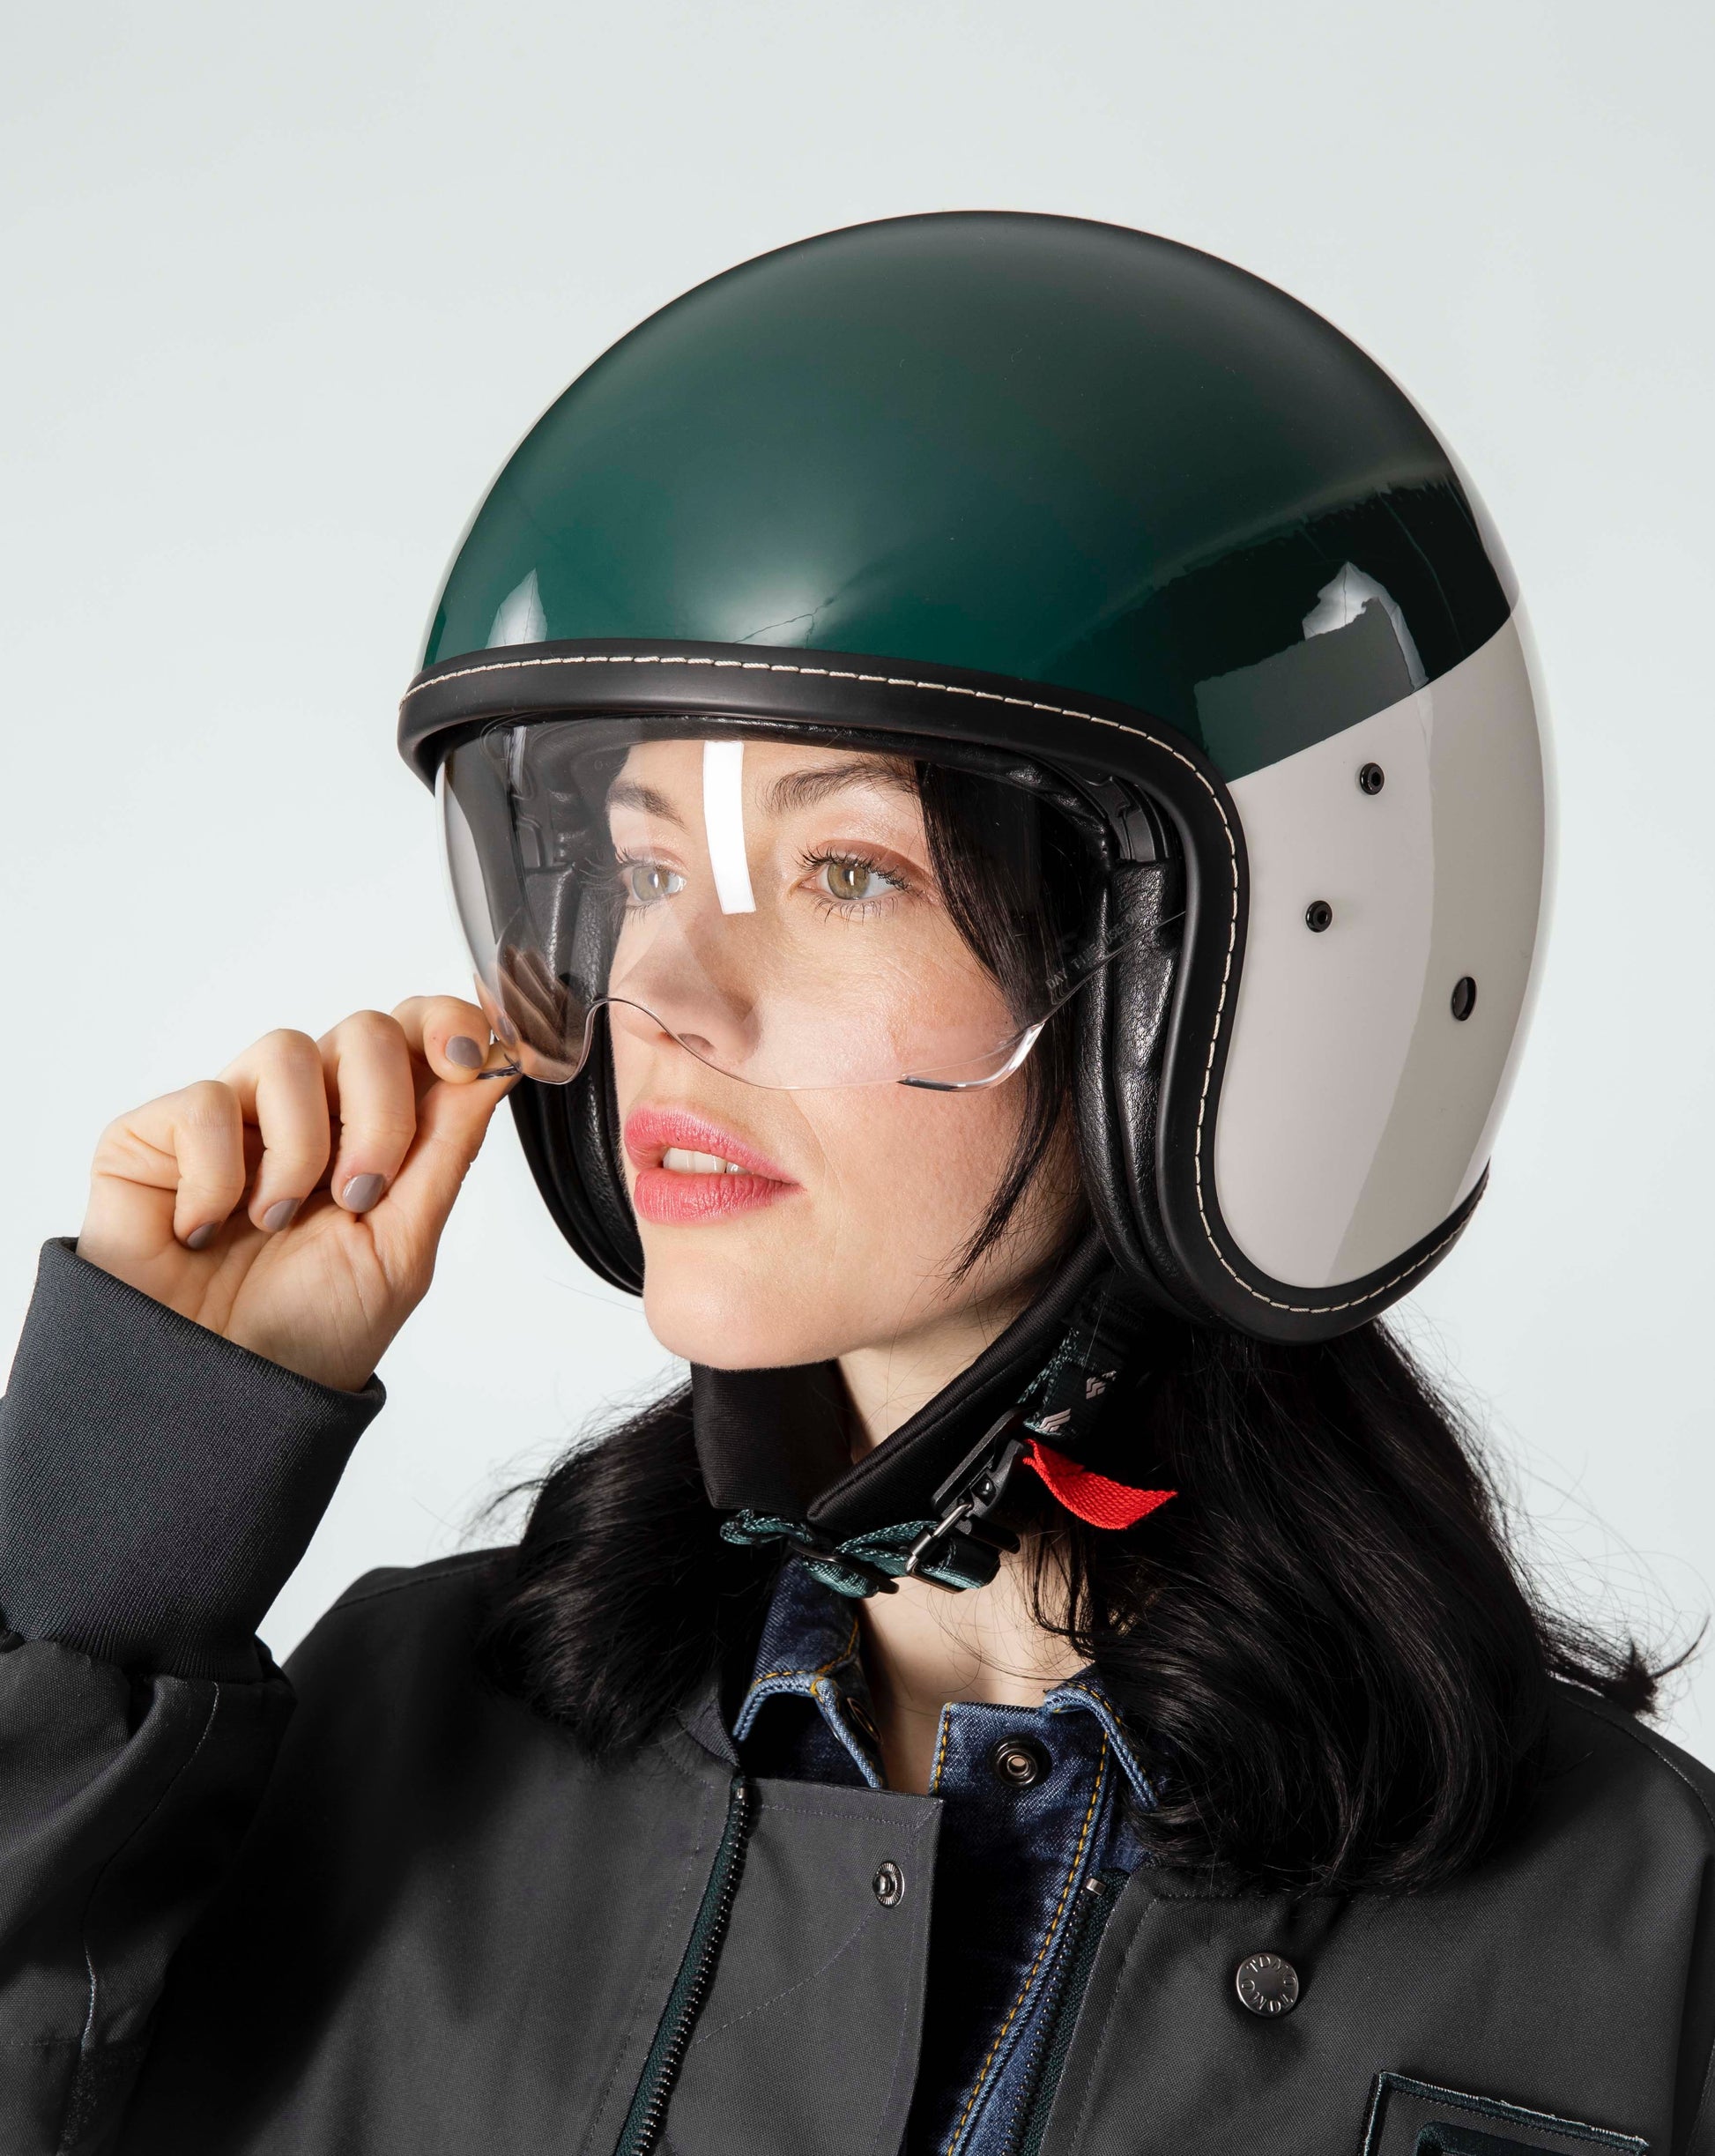 casque-moto-scooter-bicolore-vert-bouteille-ecru-brillant-profil-lunette-visiere-sangle-attache-magnetique-logo-1